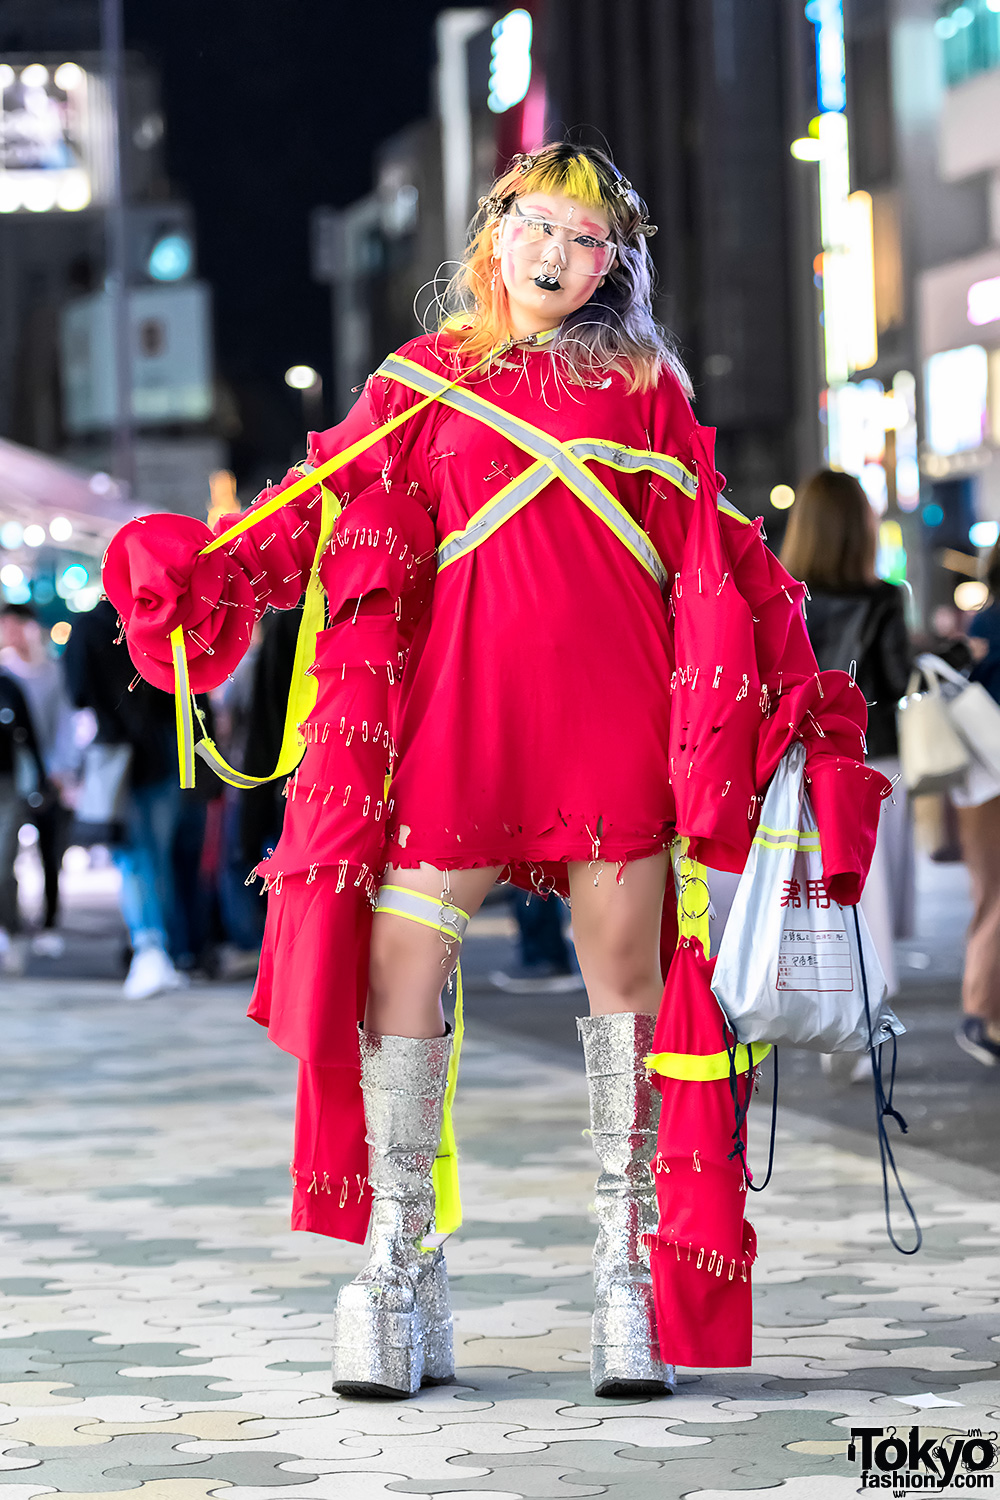 Genderless Kei - Japan’s Hot New Fashion Trend